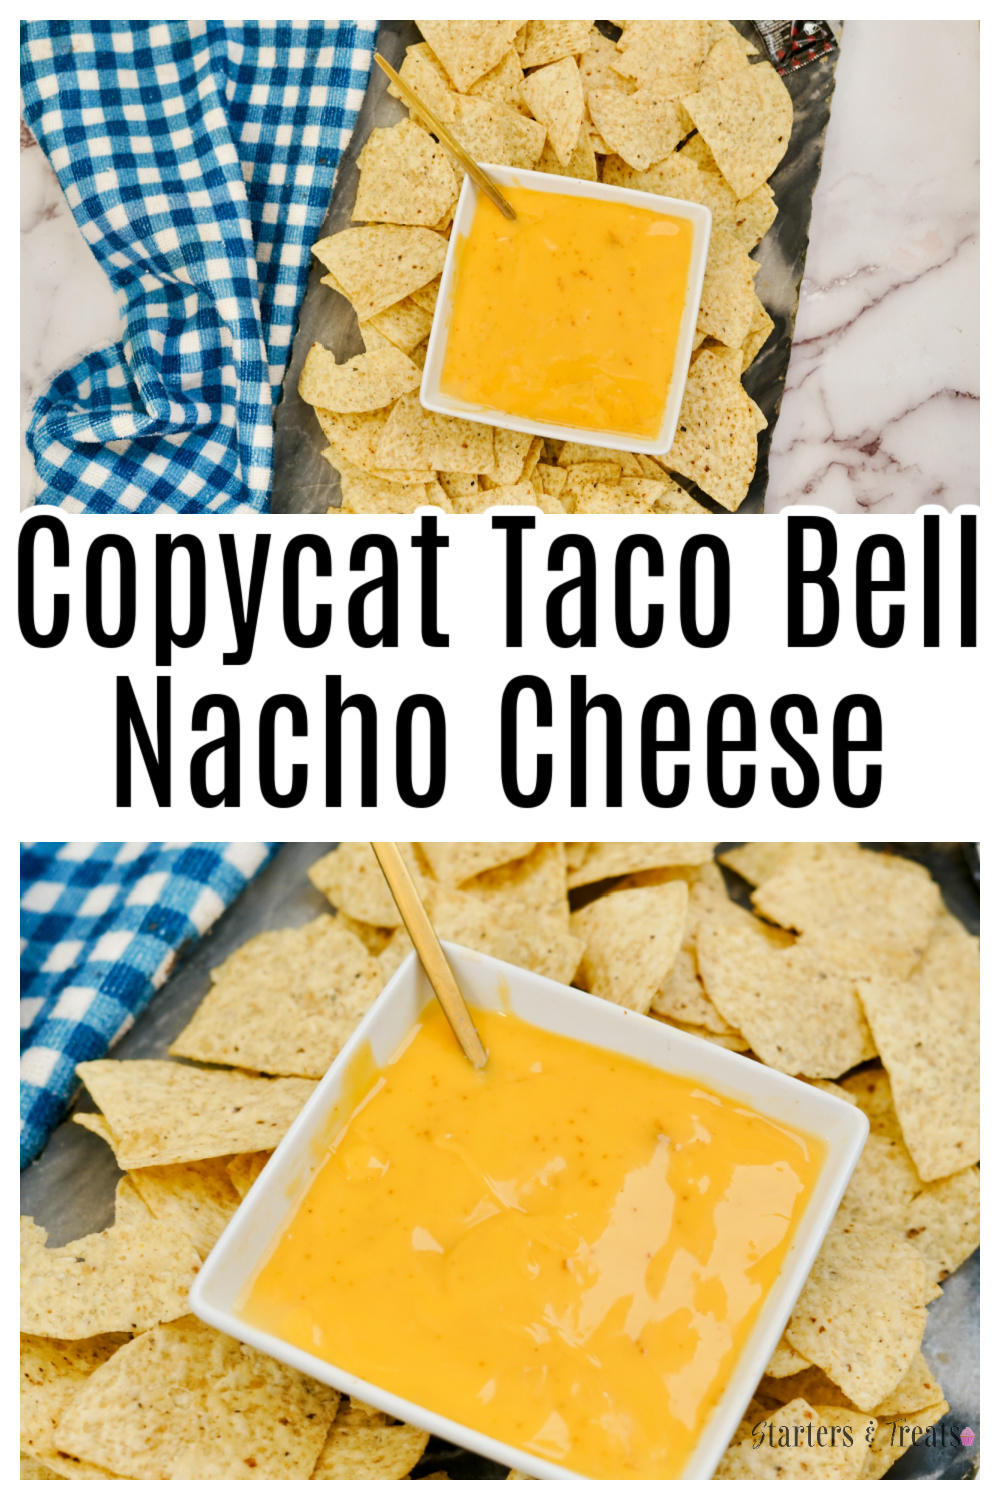 Copycat Taco Bell Nacho Cheese 